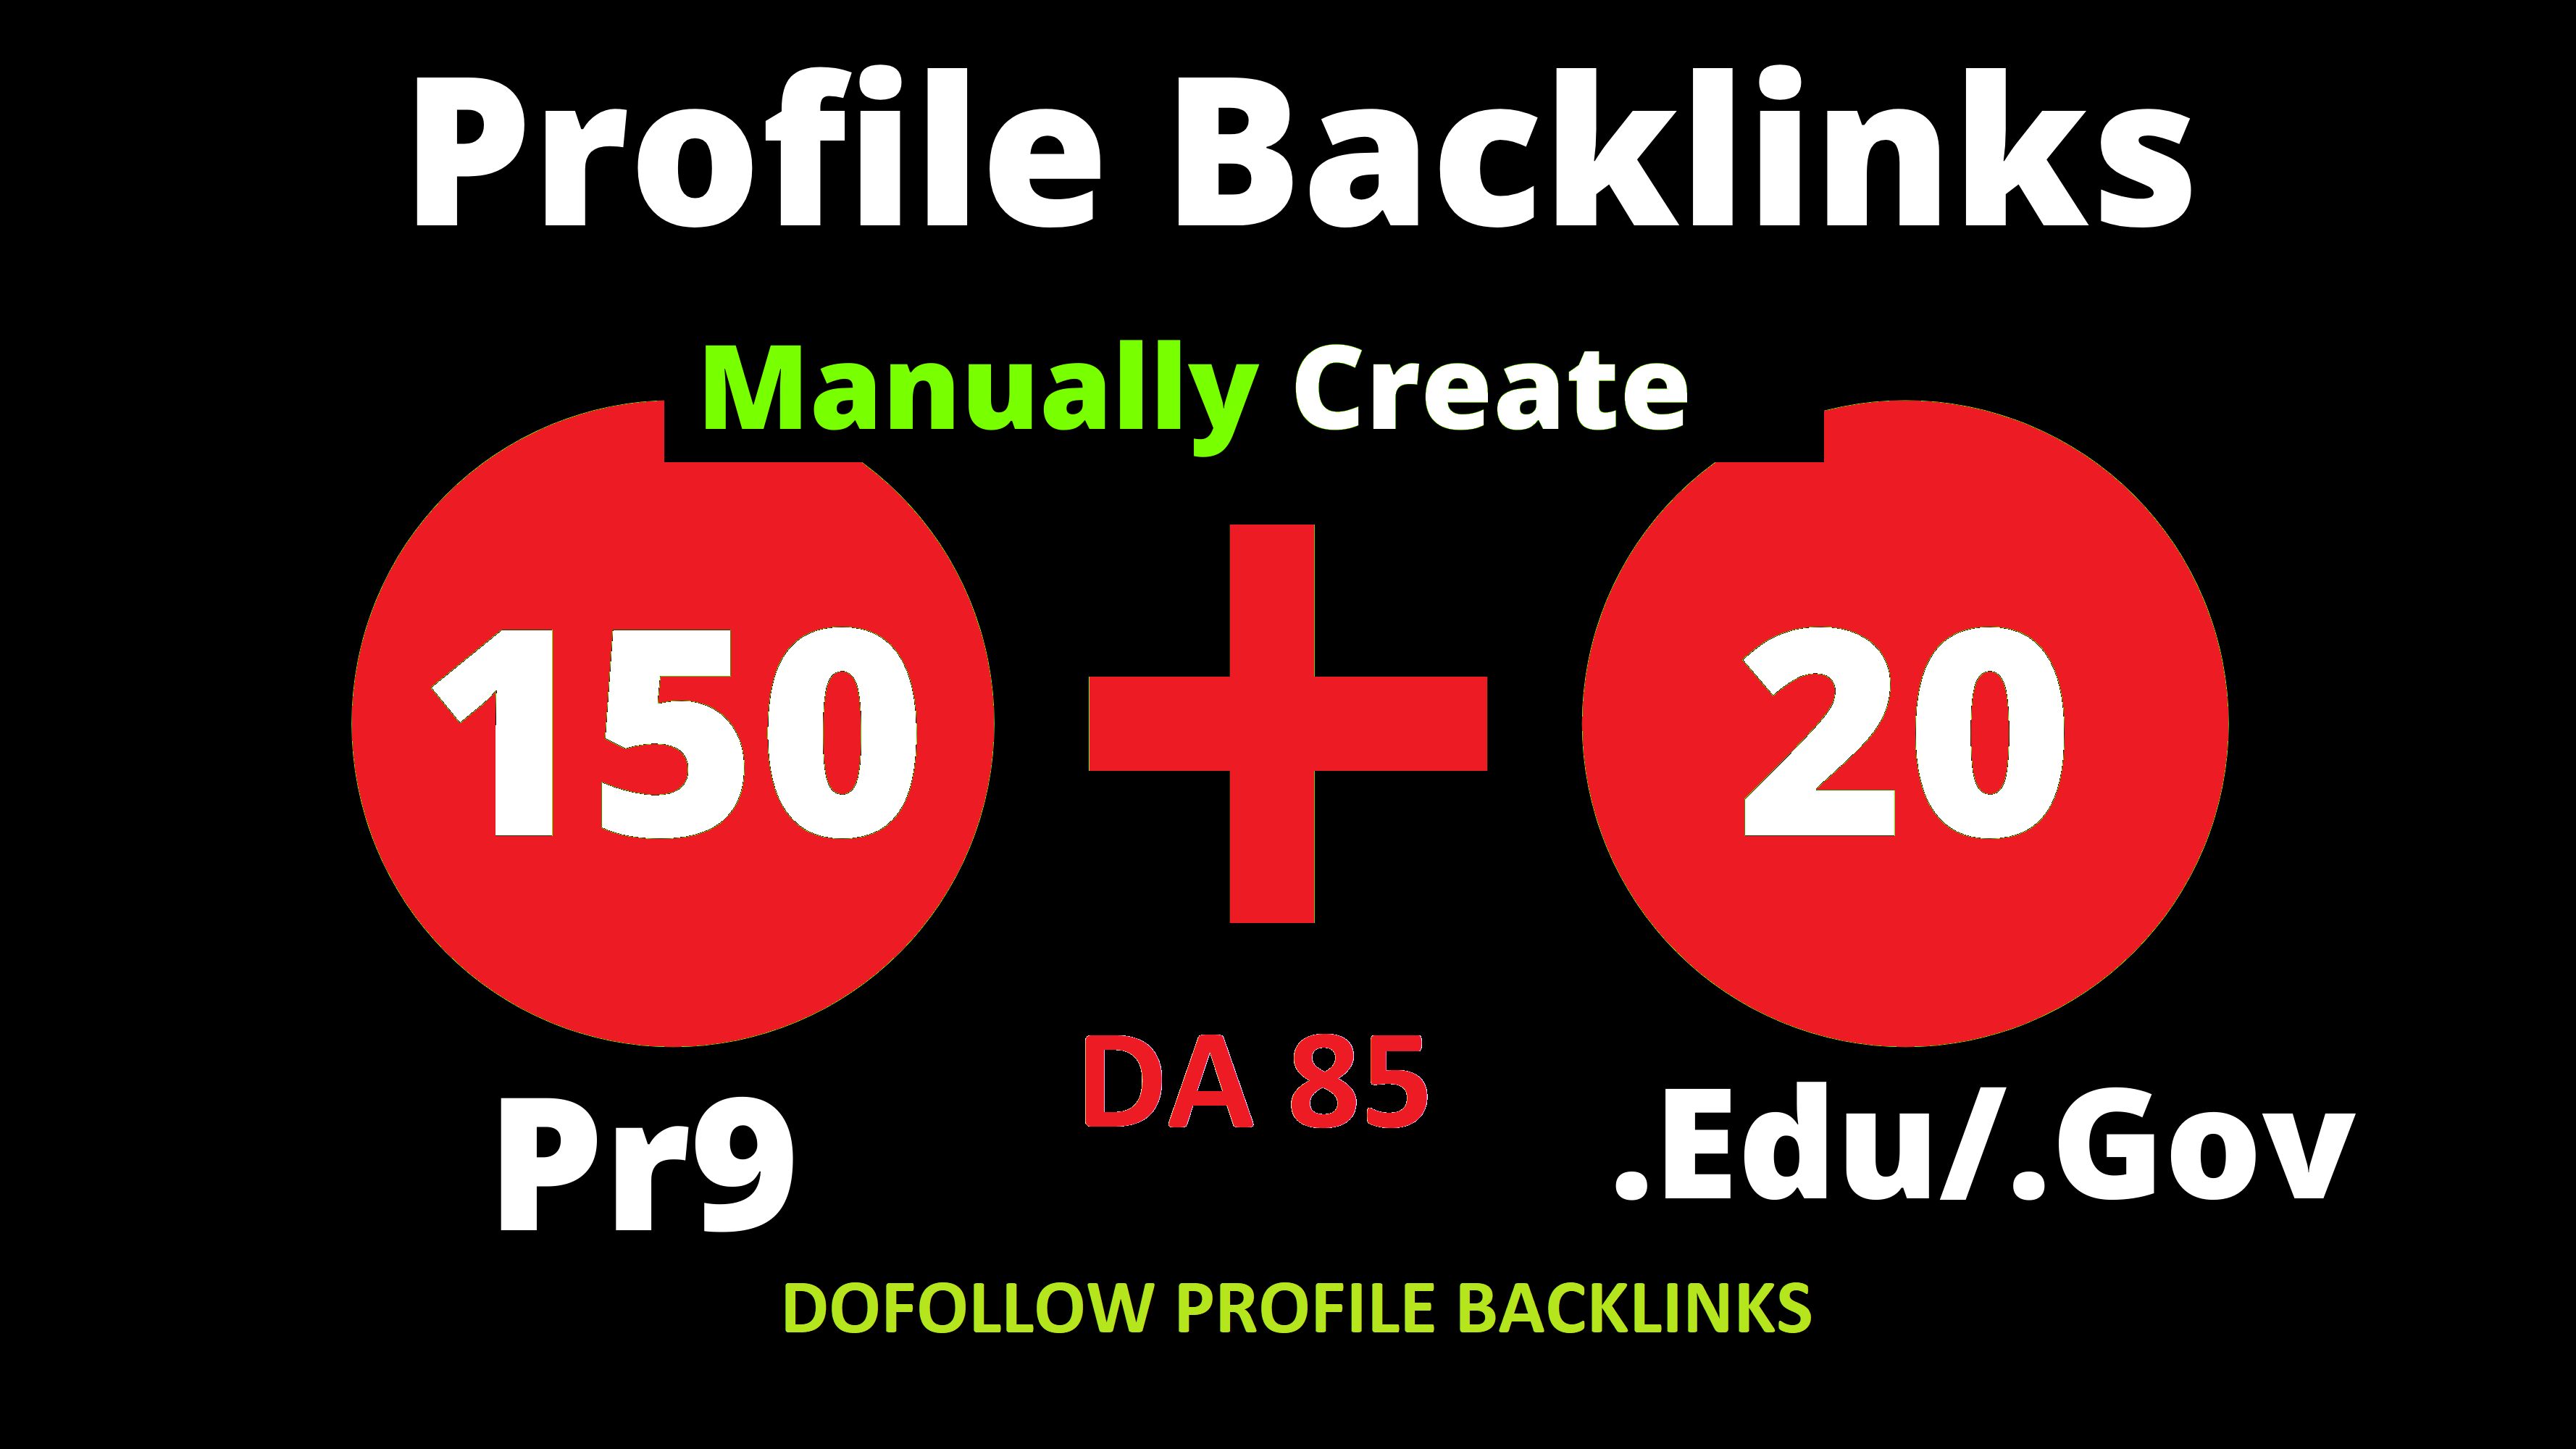 150 Pr9 + 20 Edu/Gov Pr9 High Authority Profile Backlinks To Boost Your Website Ranking